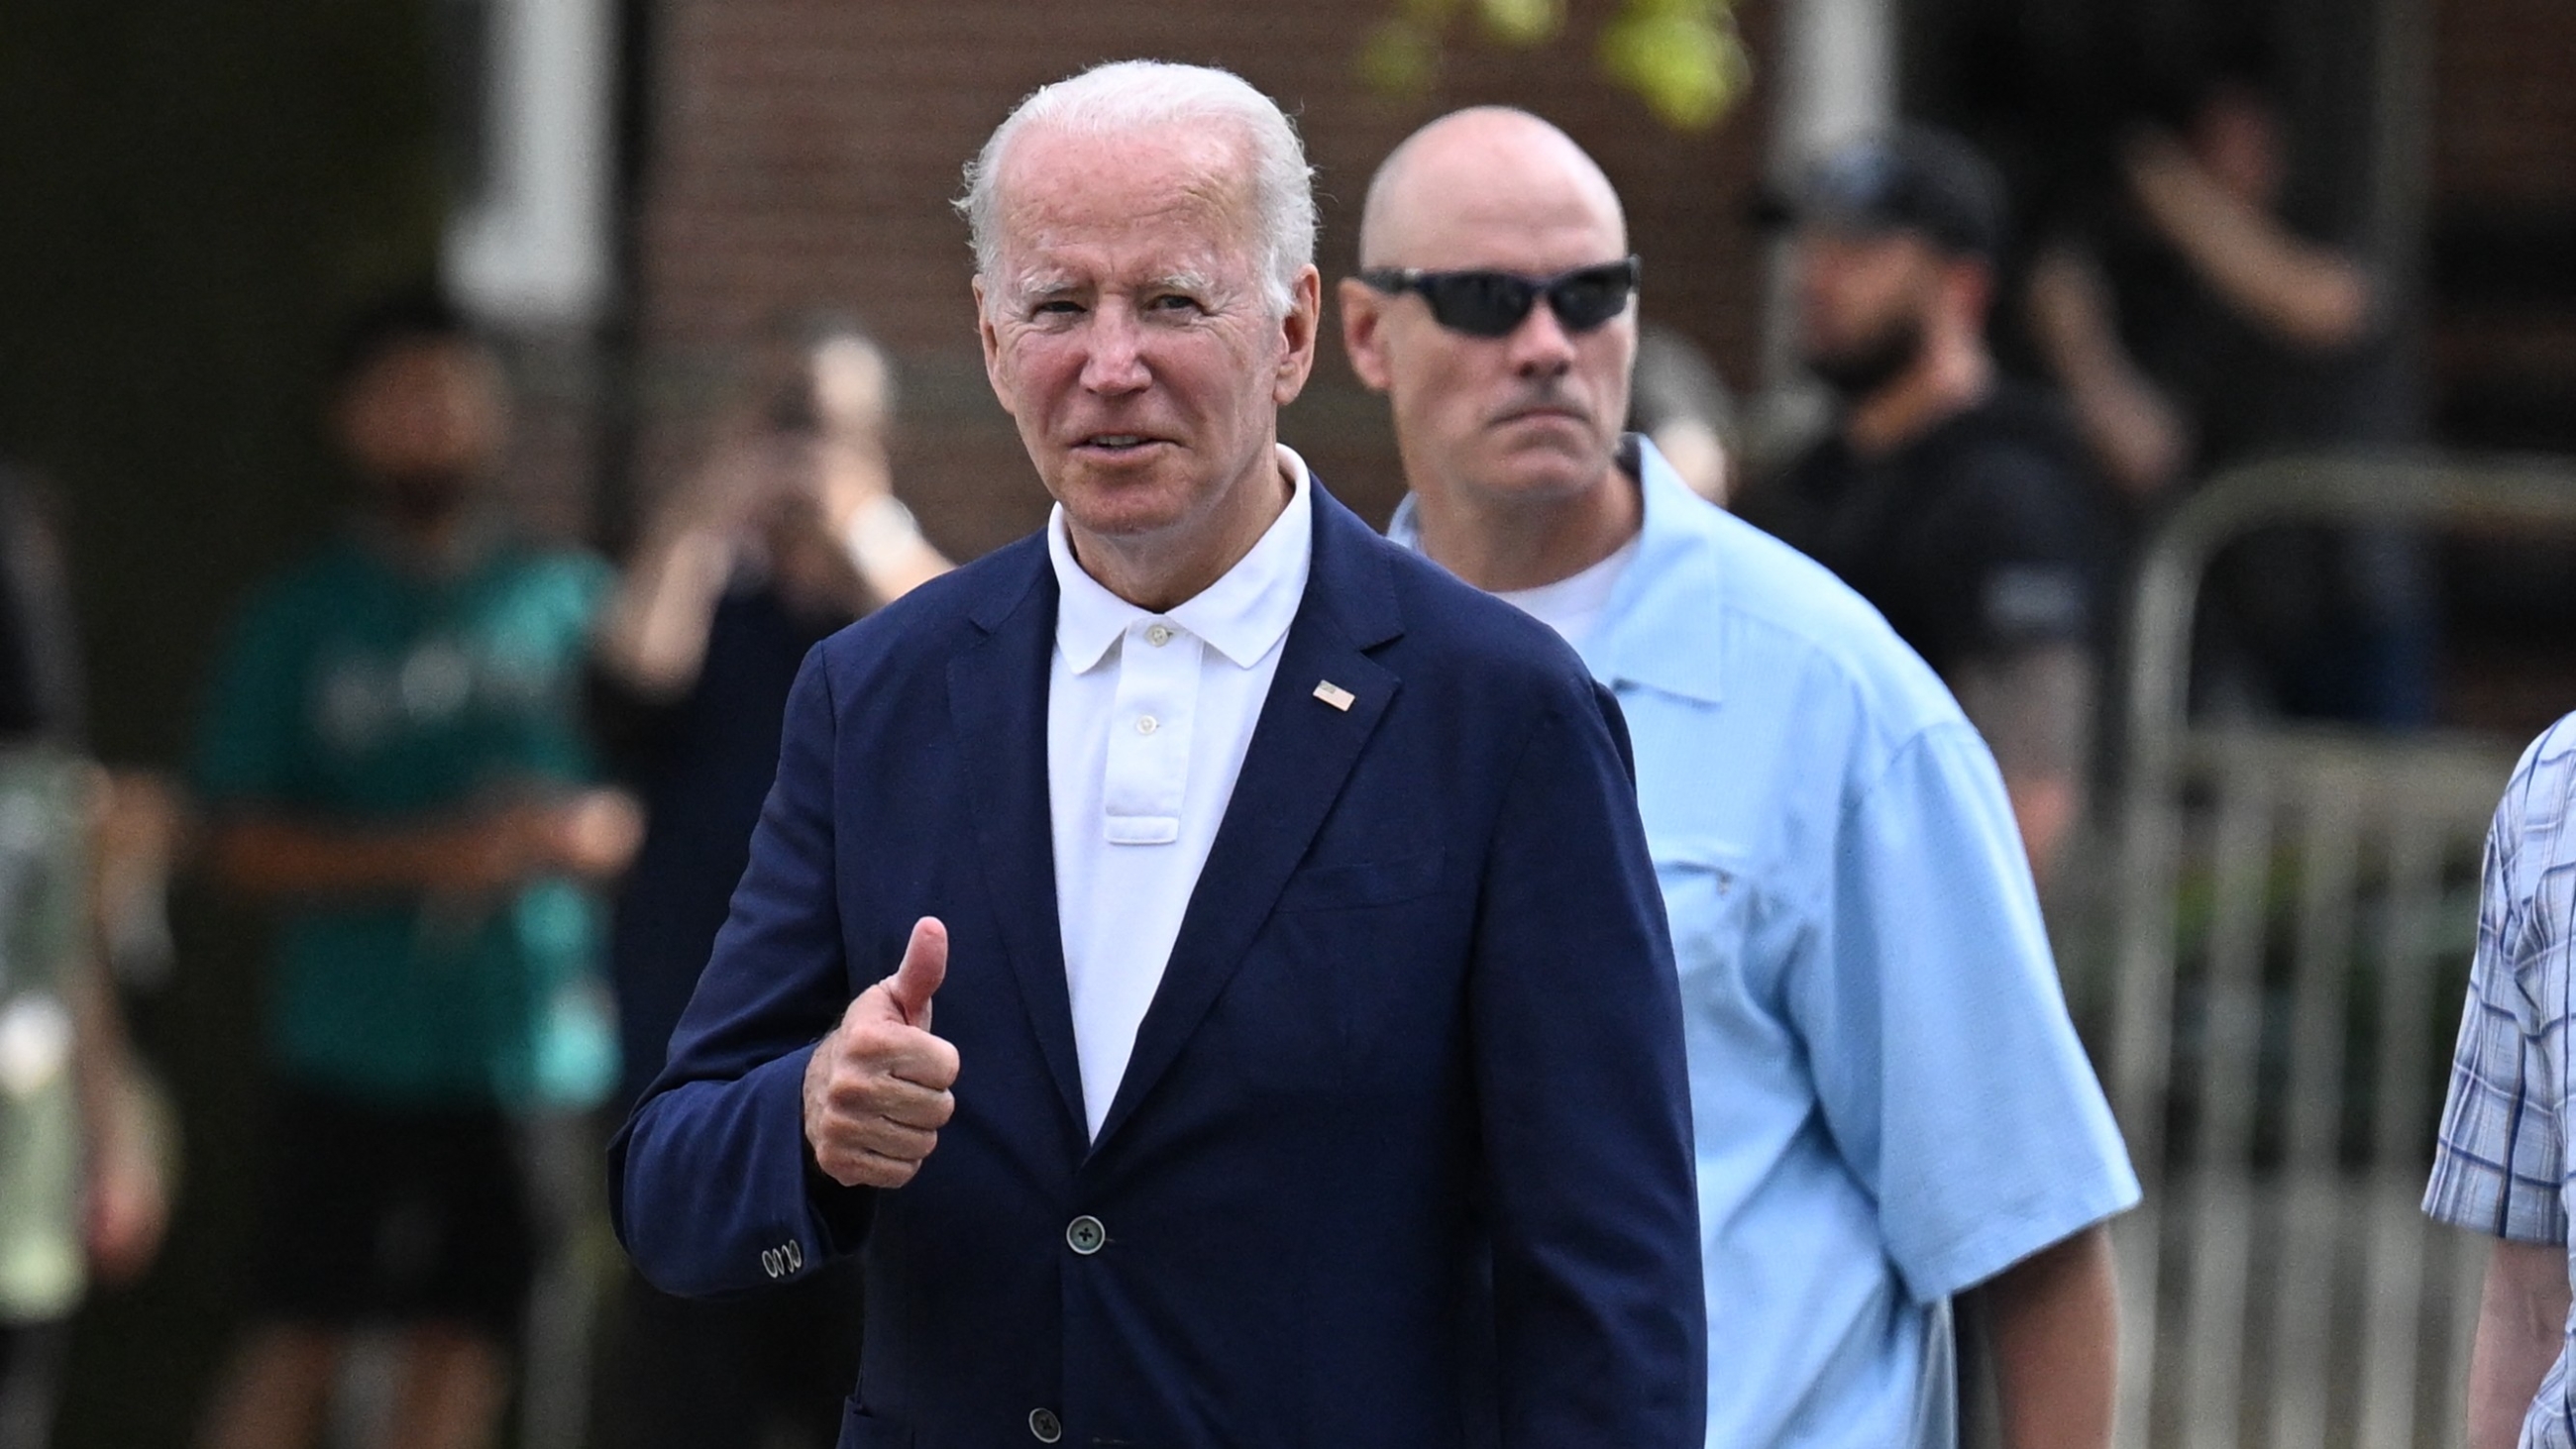 US President Joe Biden departs following mass at St Anthony of Padua church in Wilmington, Delaware, 12 June 2022. (AFP)